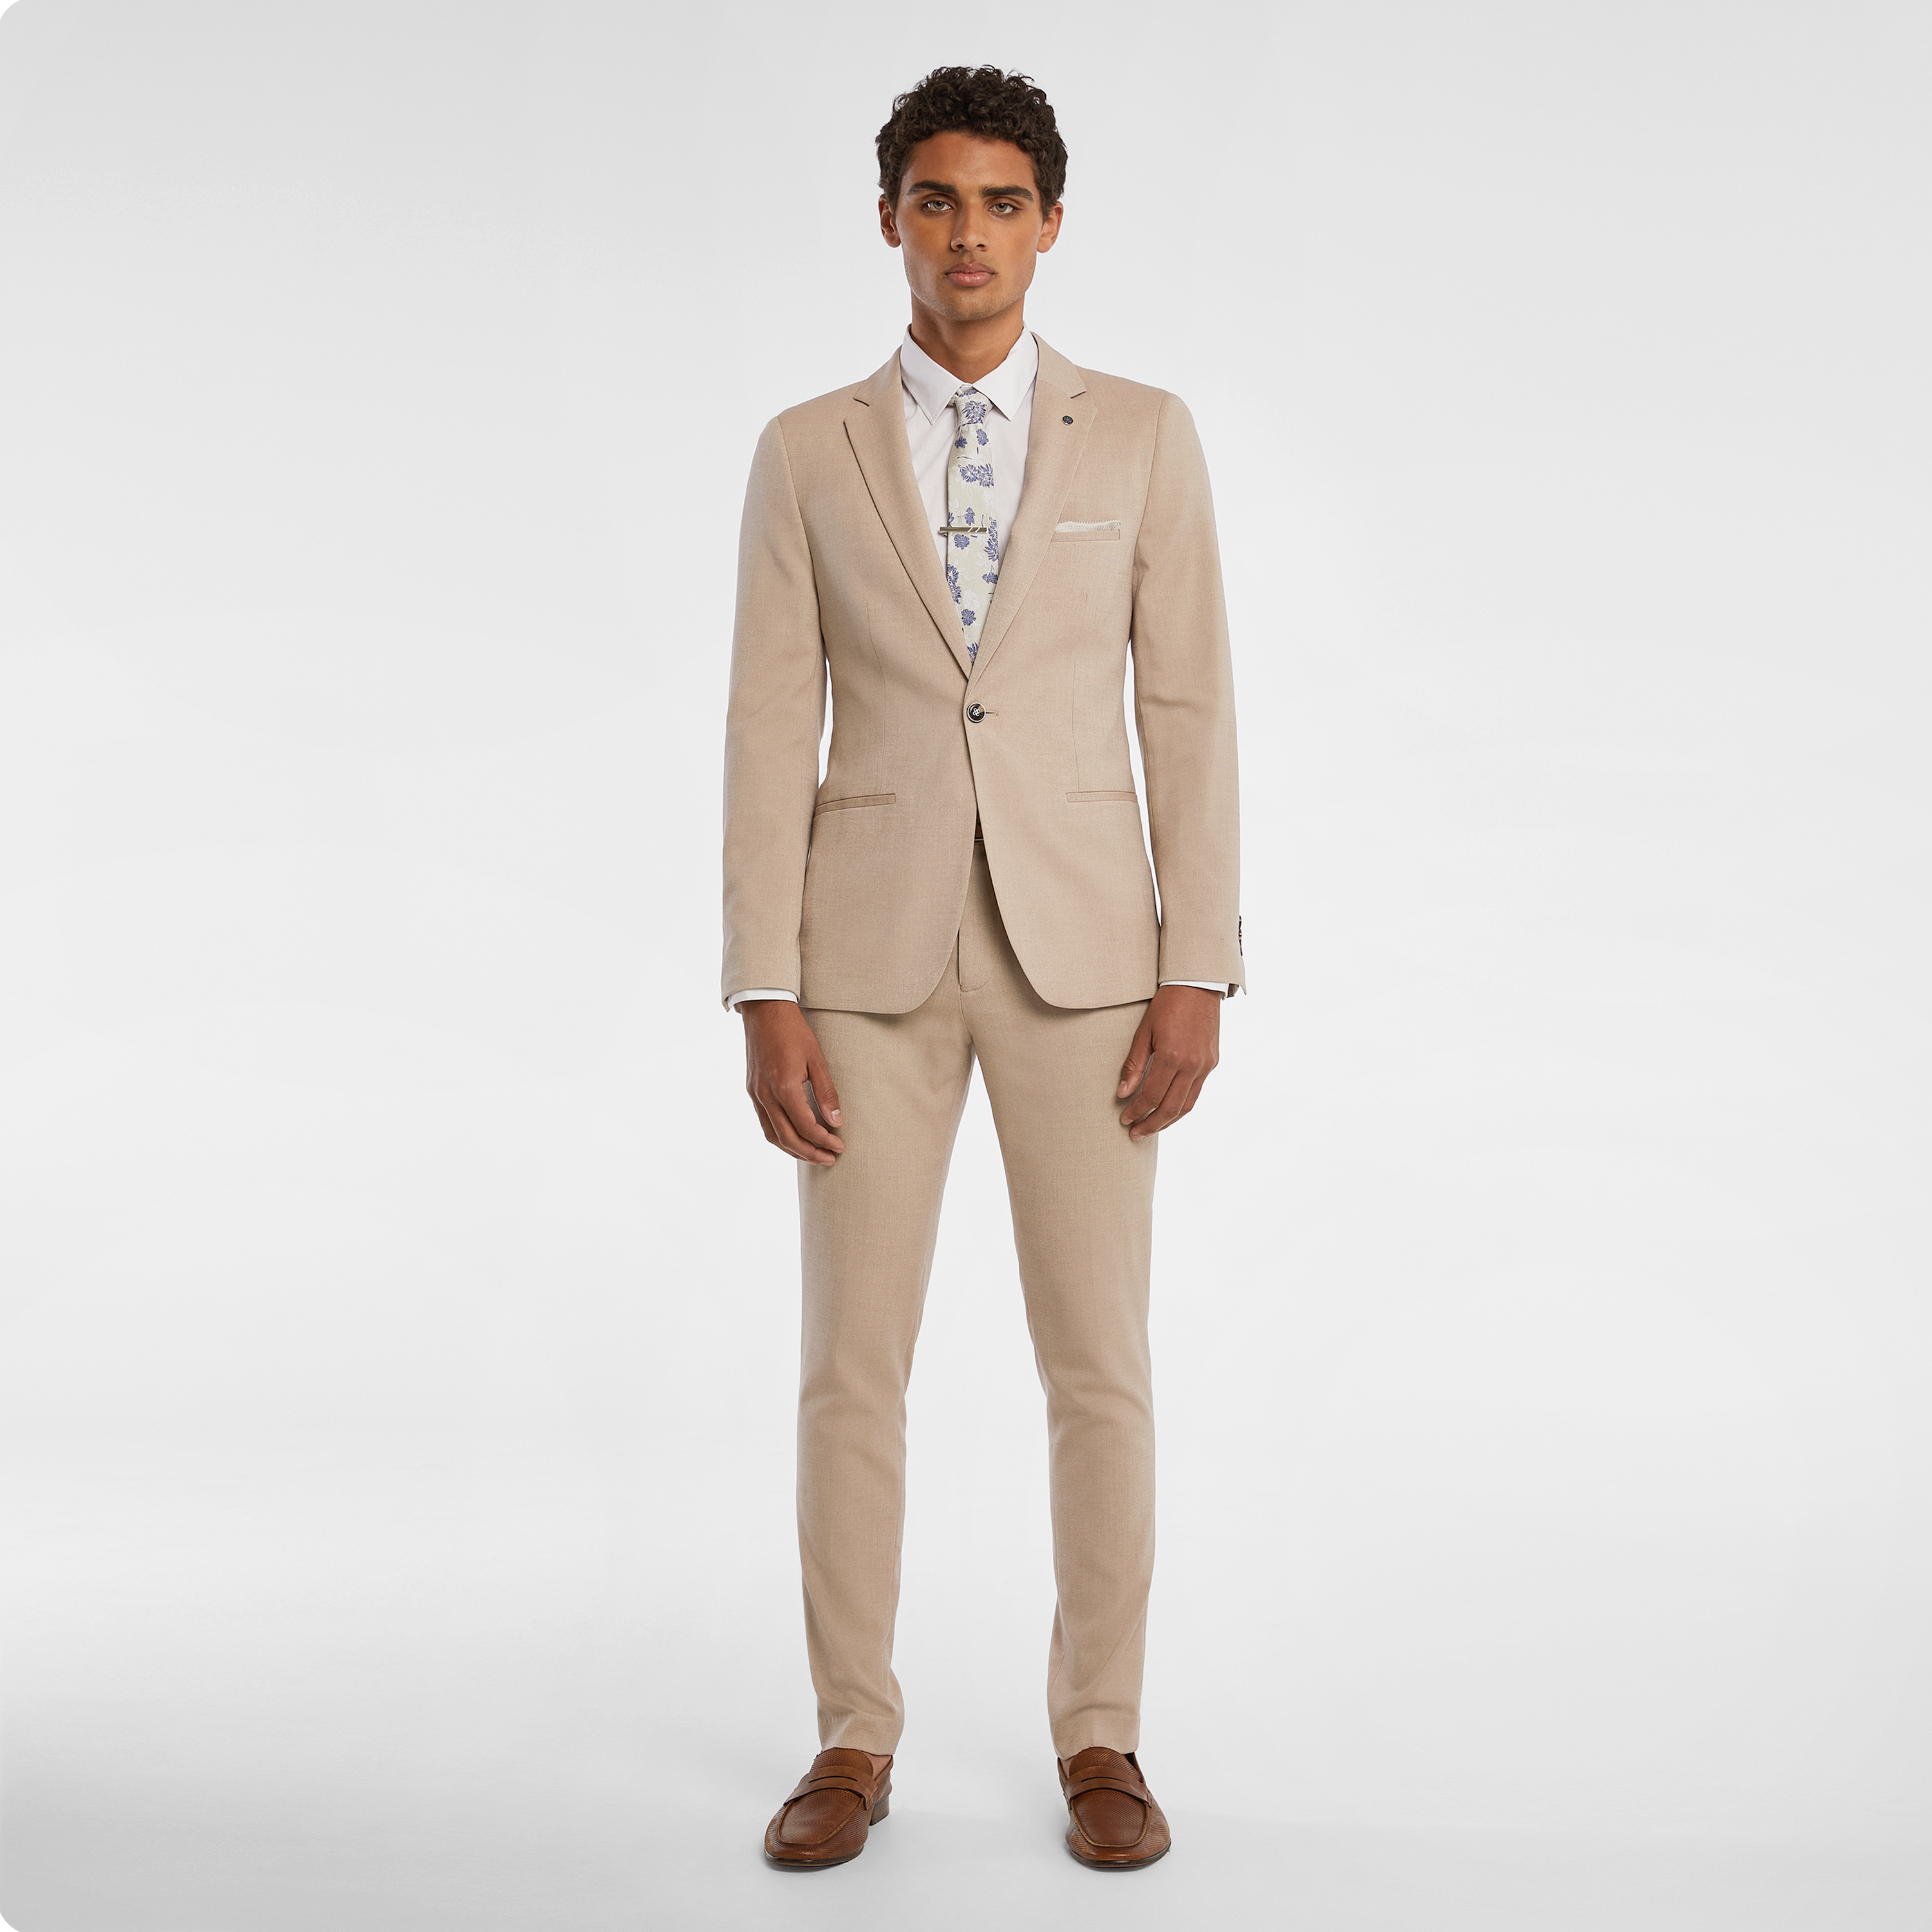 The Best Suit, Shirt & Tie Combos - Modern Men's Guide